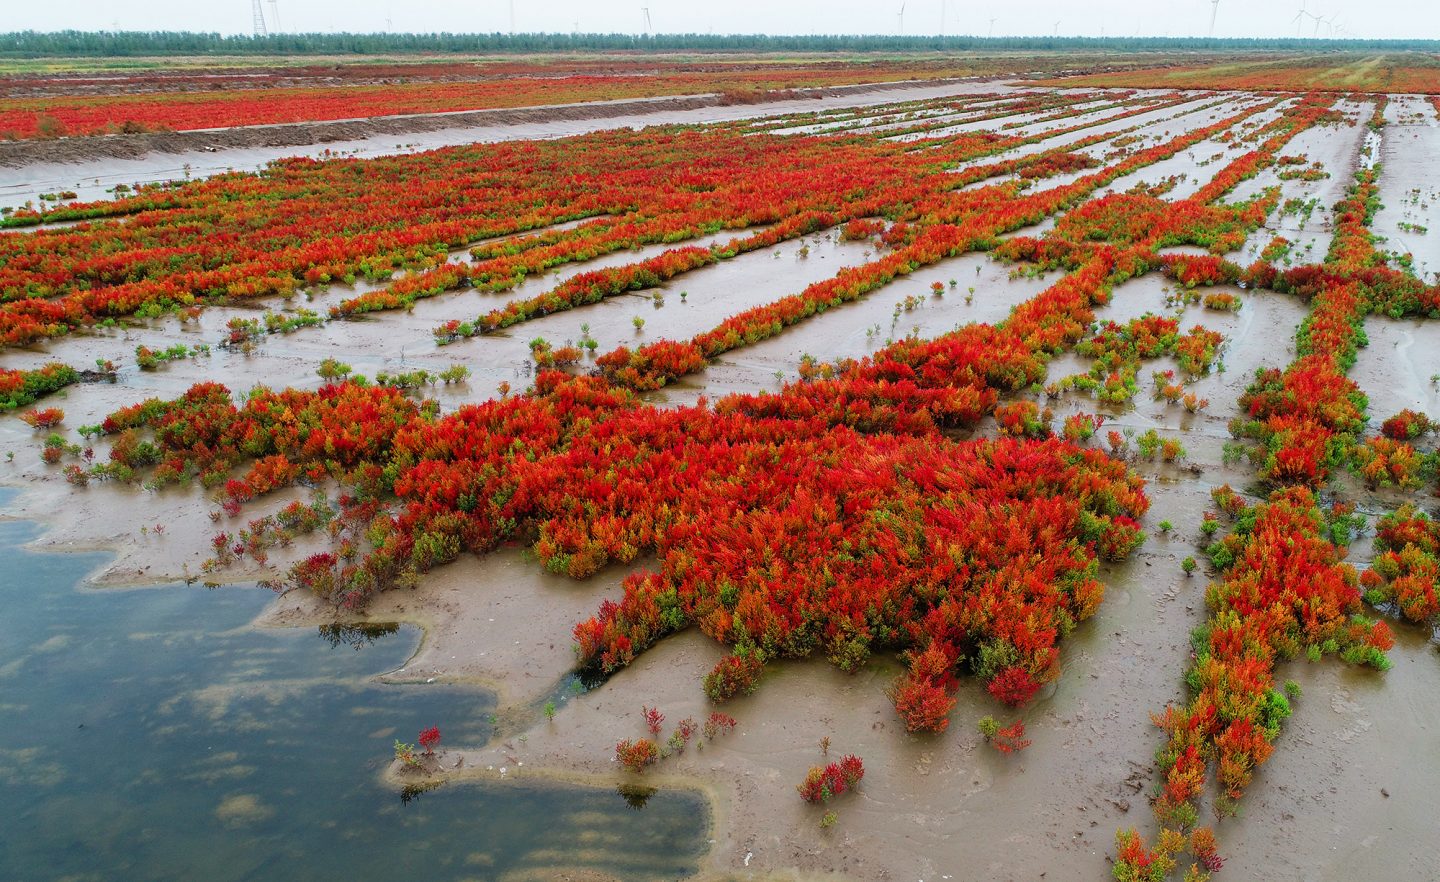 reclaimed wetlands in Tiaozini